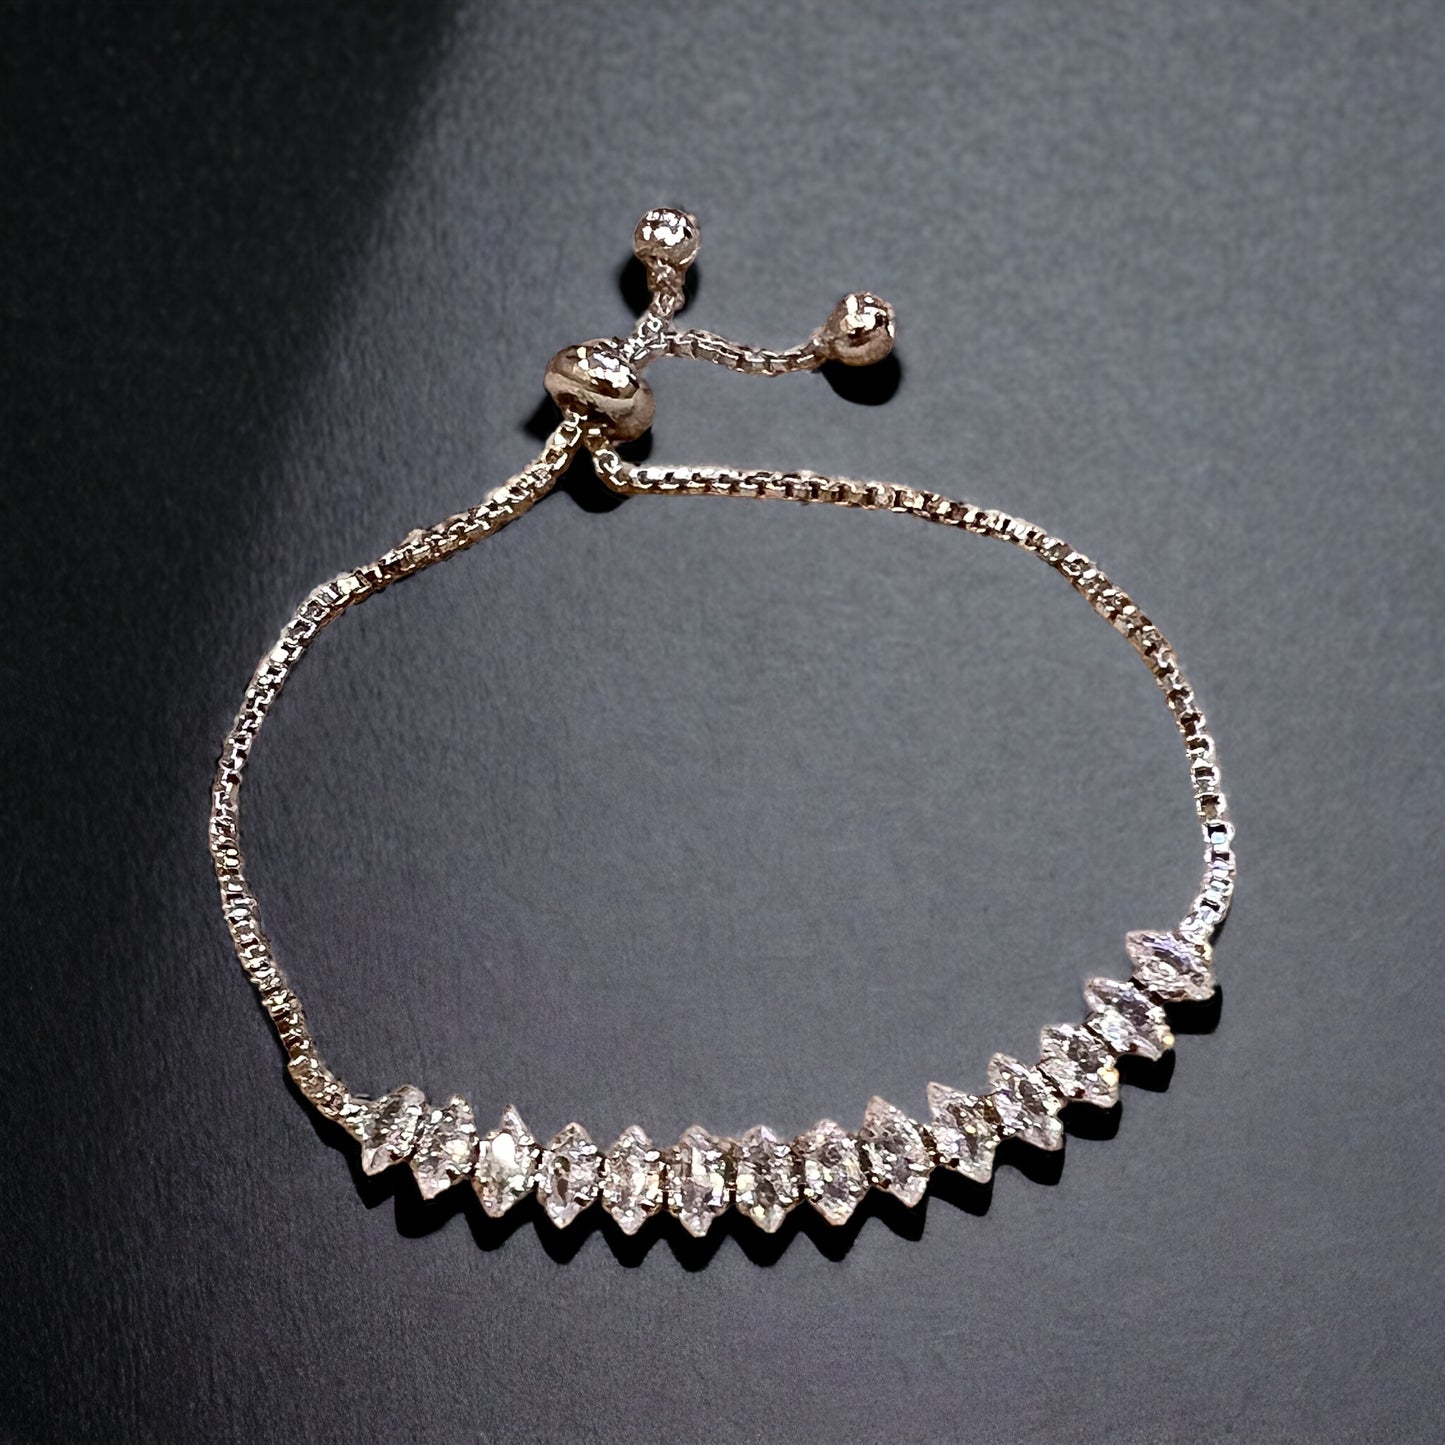 American Daimond silver Bracelet